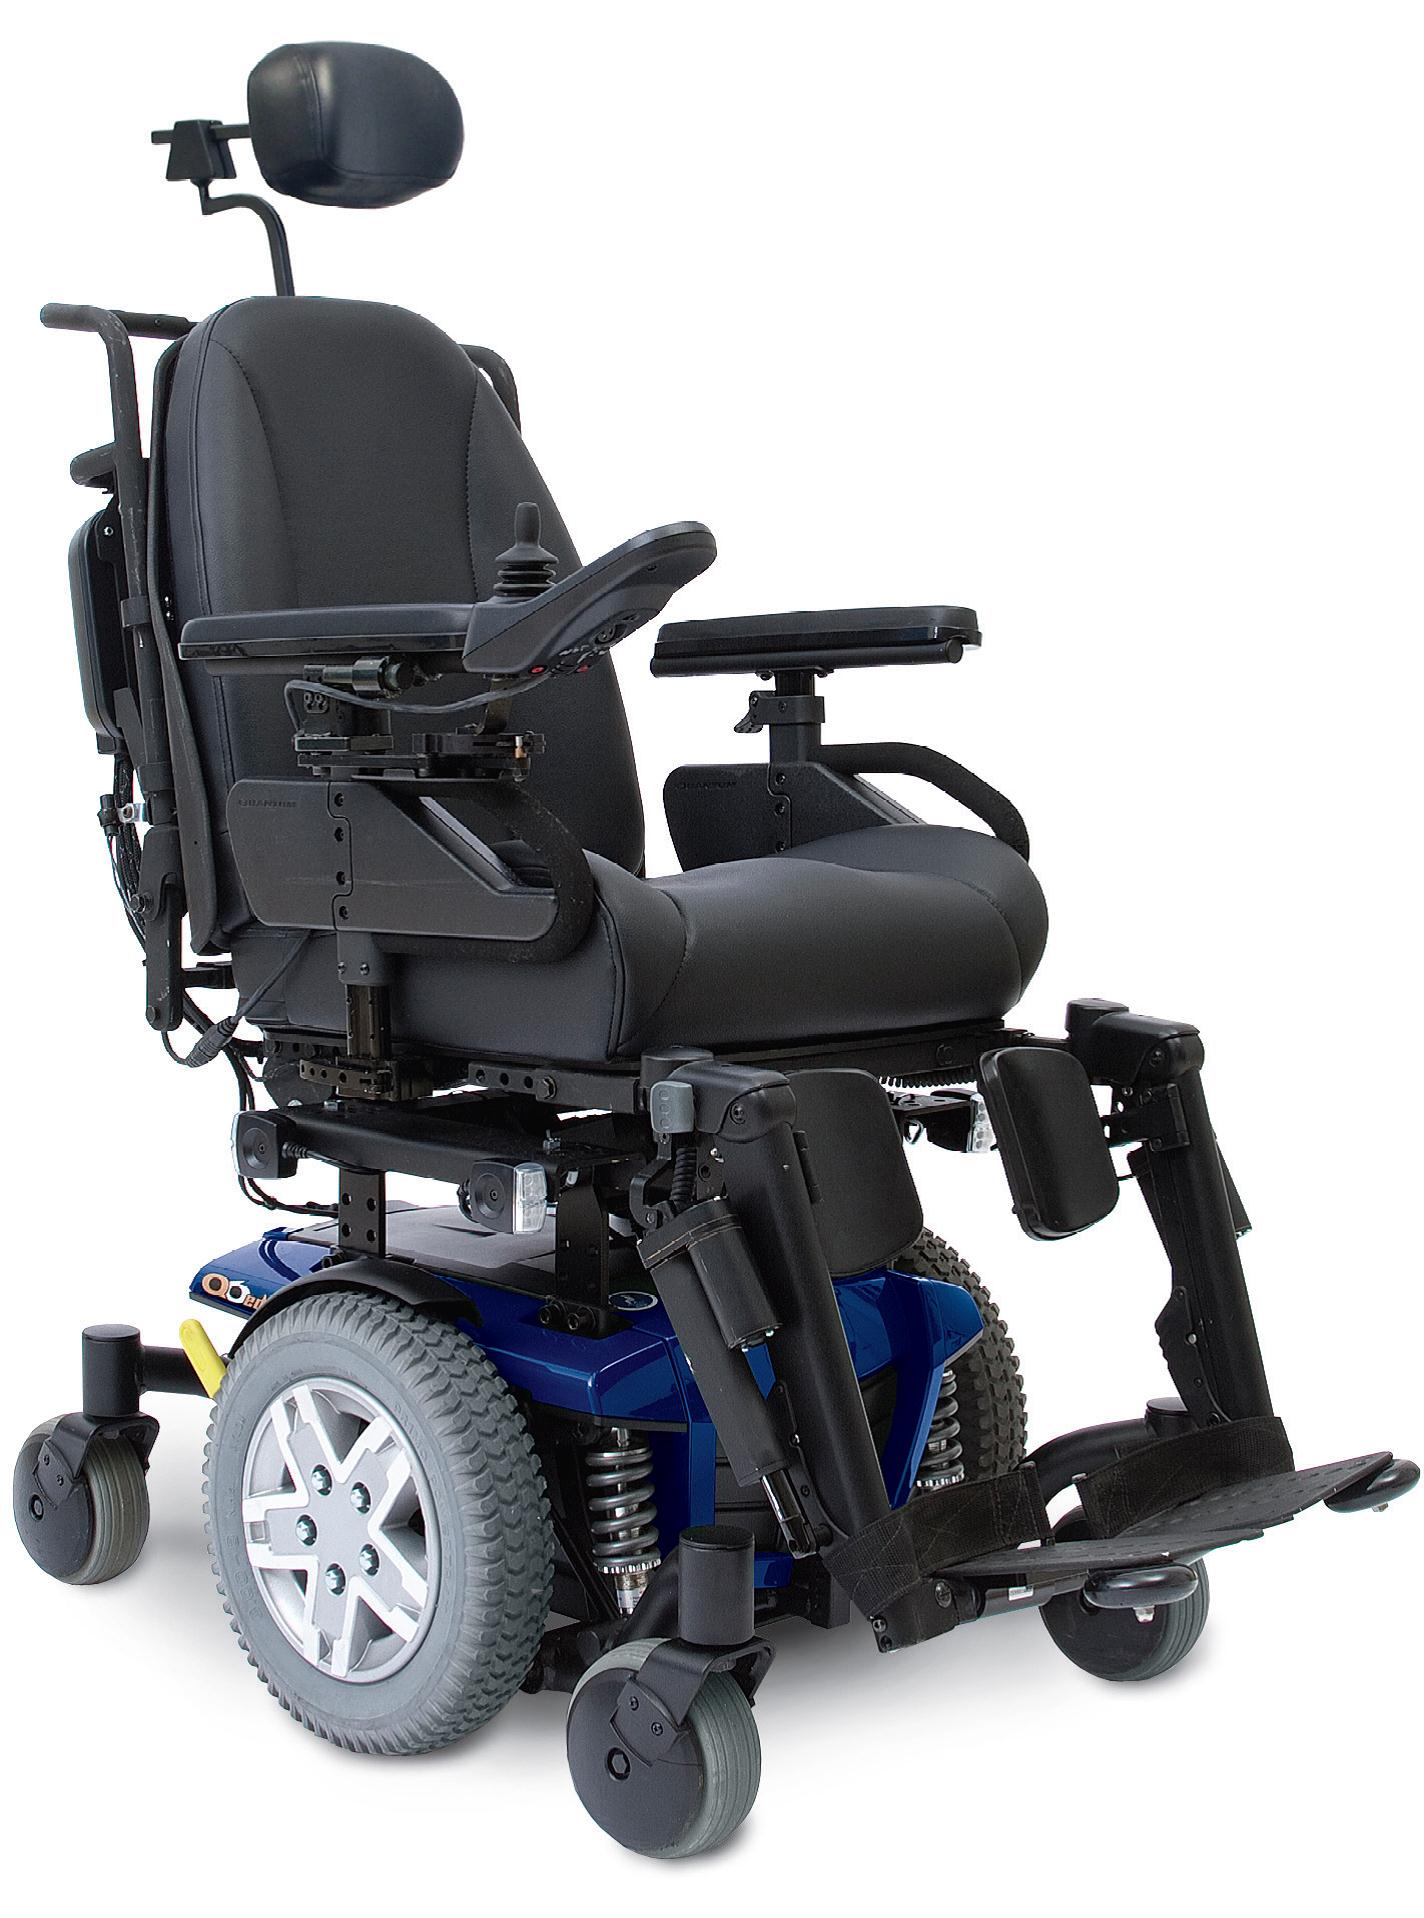 Choosing the Perfect Fitting Wheelchair Macdonald's HHC